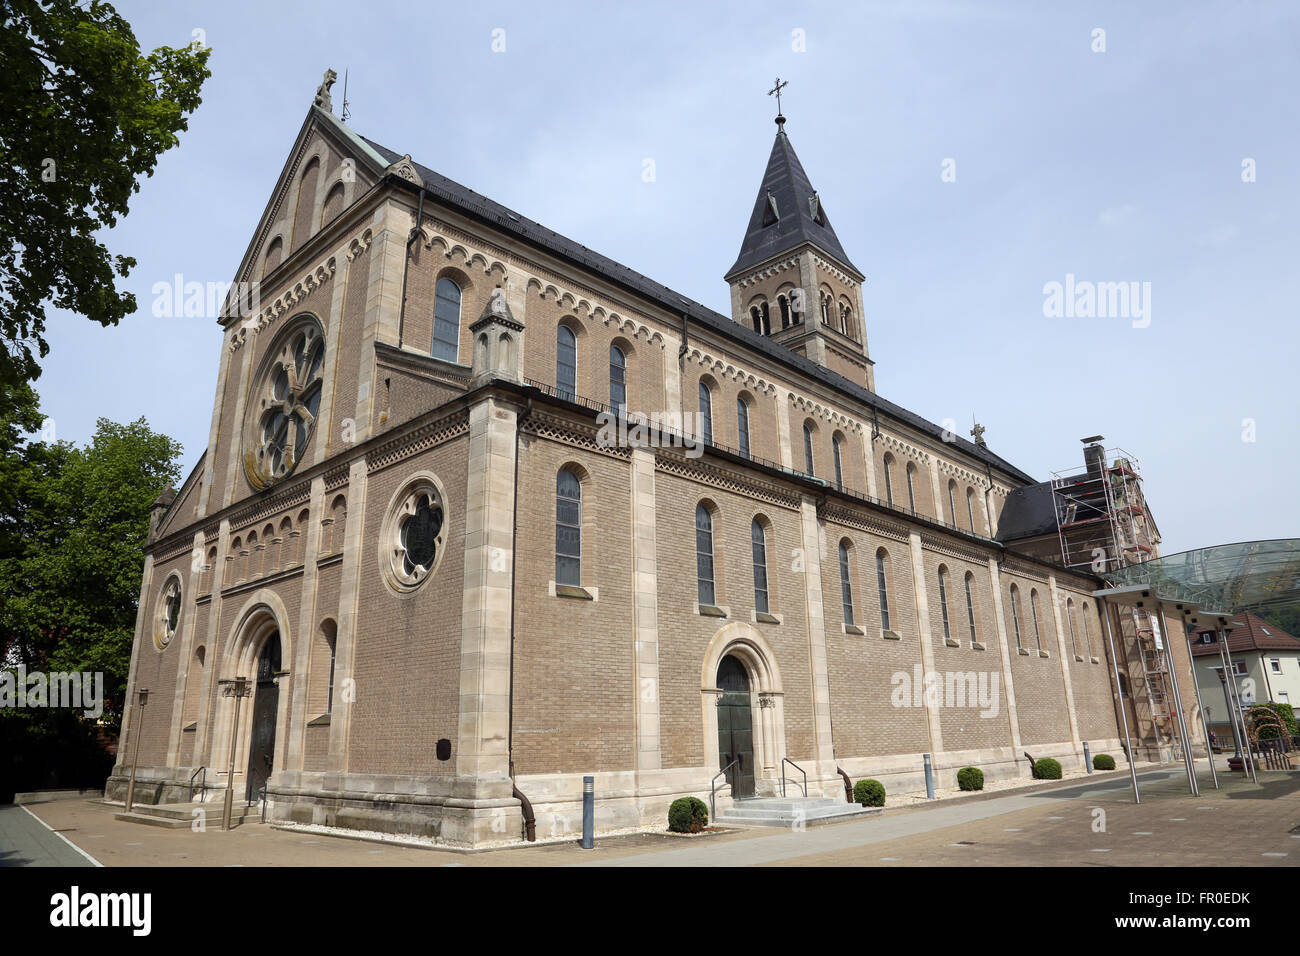 Saint Stephen parish church in Wasseralfingen, Germany on May 05, 2014. Stock Photo